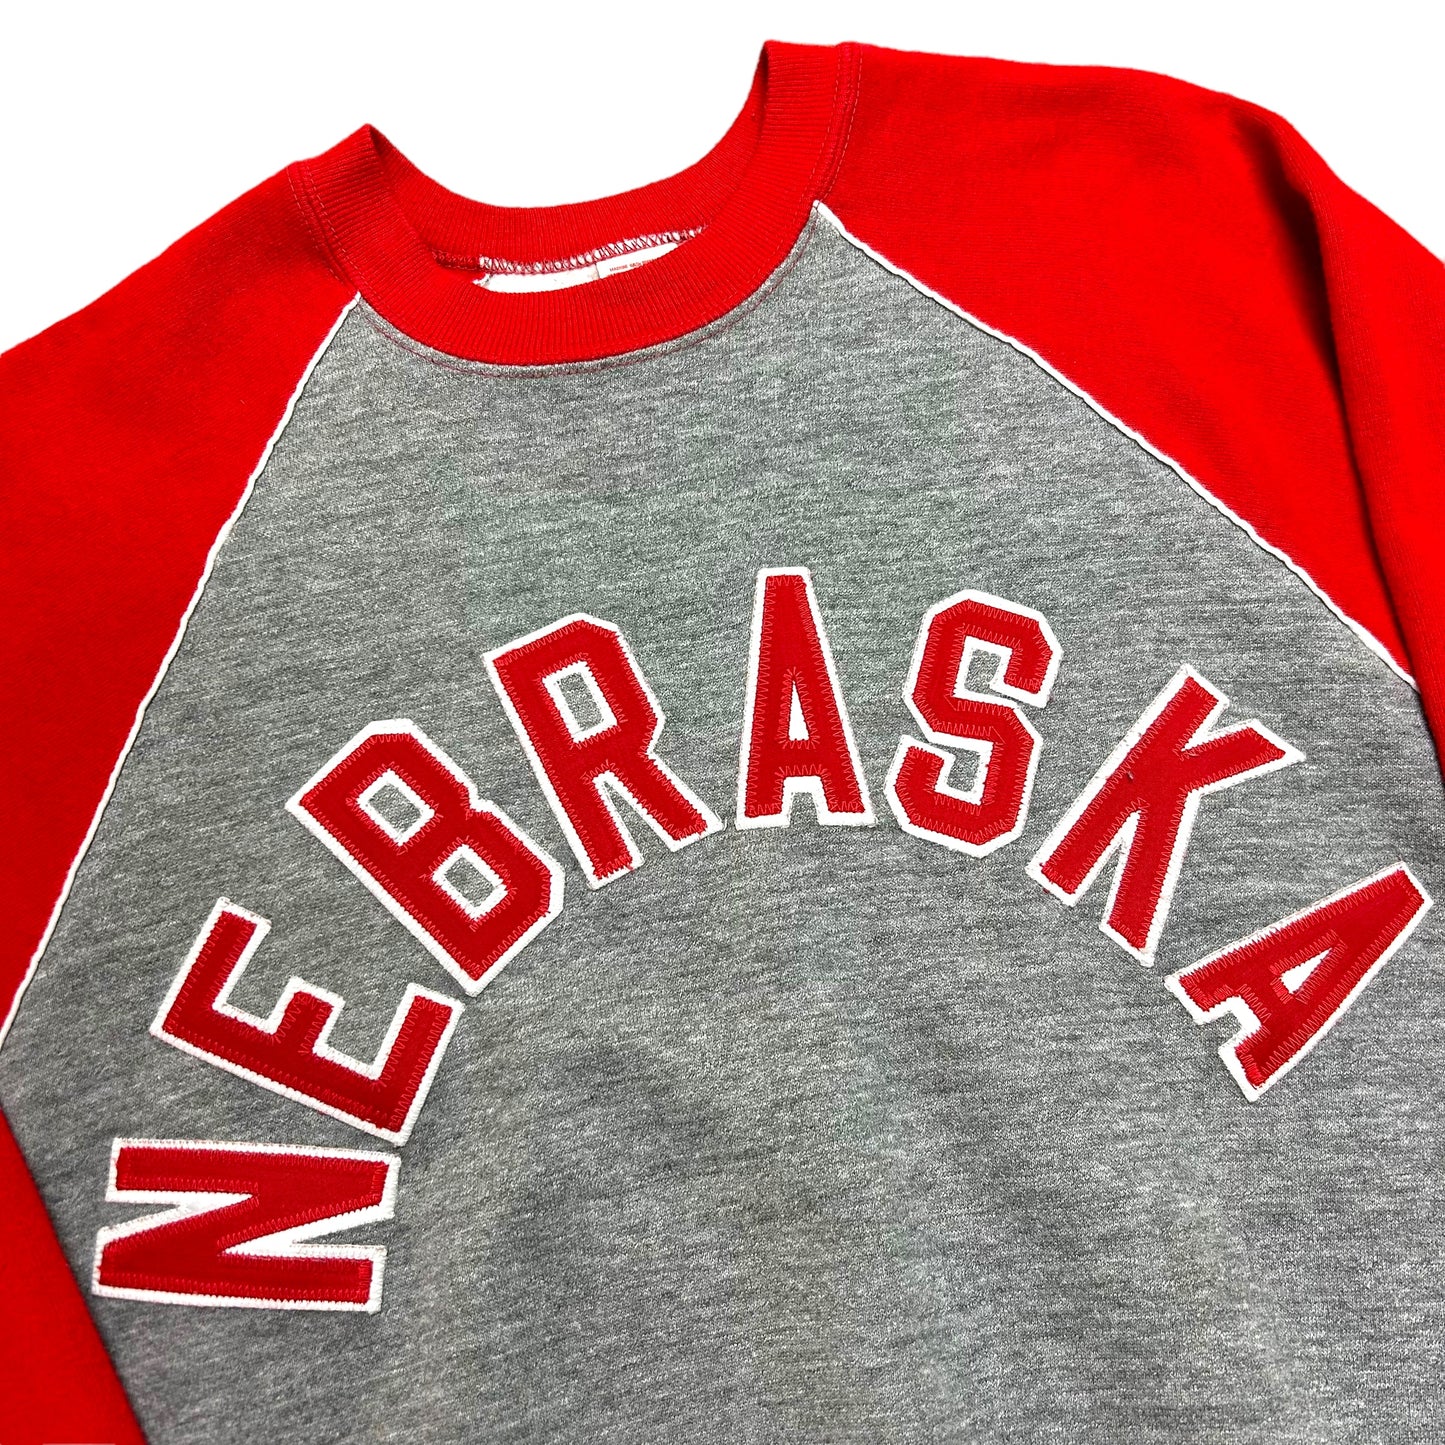 Vintage 1980s Nebraska Cornhuskers Heather Grey/Red Embroidered Crewneck Sweatshirt - Size Large